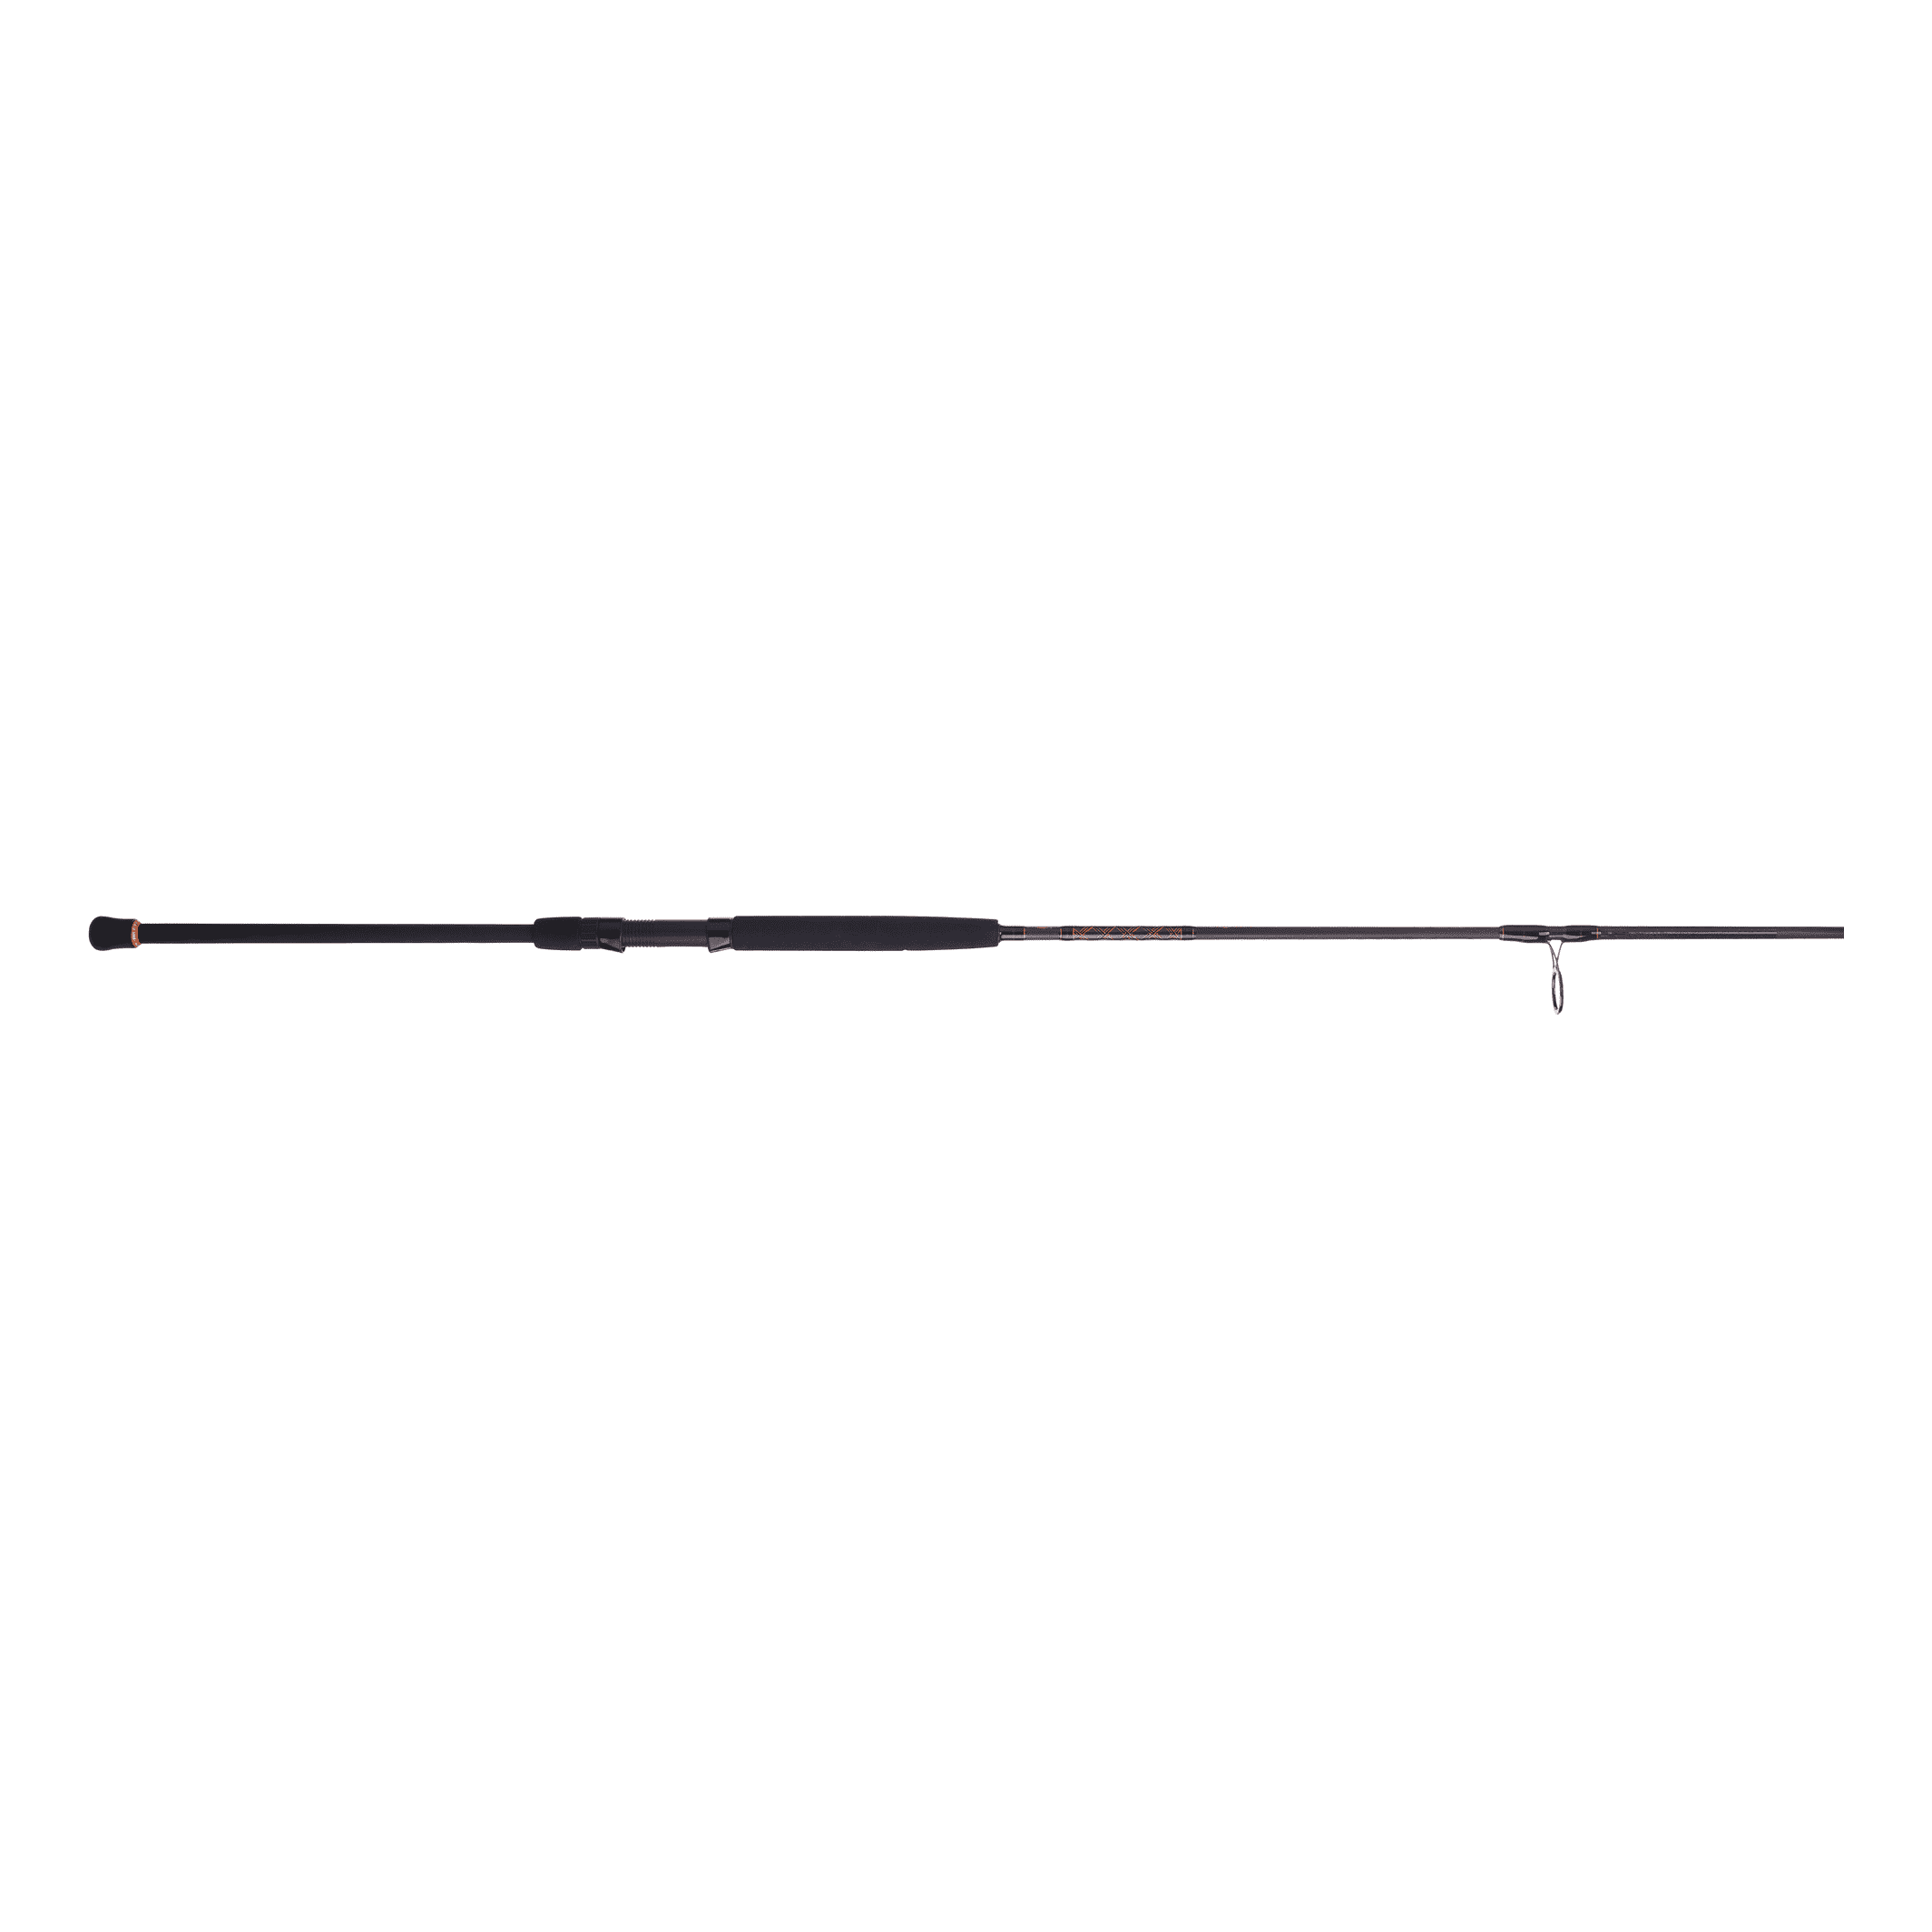 Spinning Rods: Bass, Salmon, Steelhead & Crappie Spinning Rods